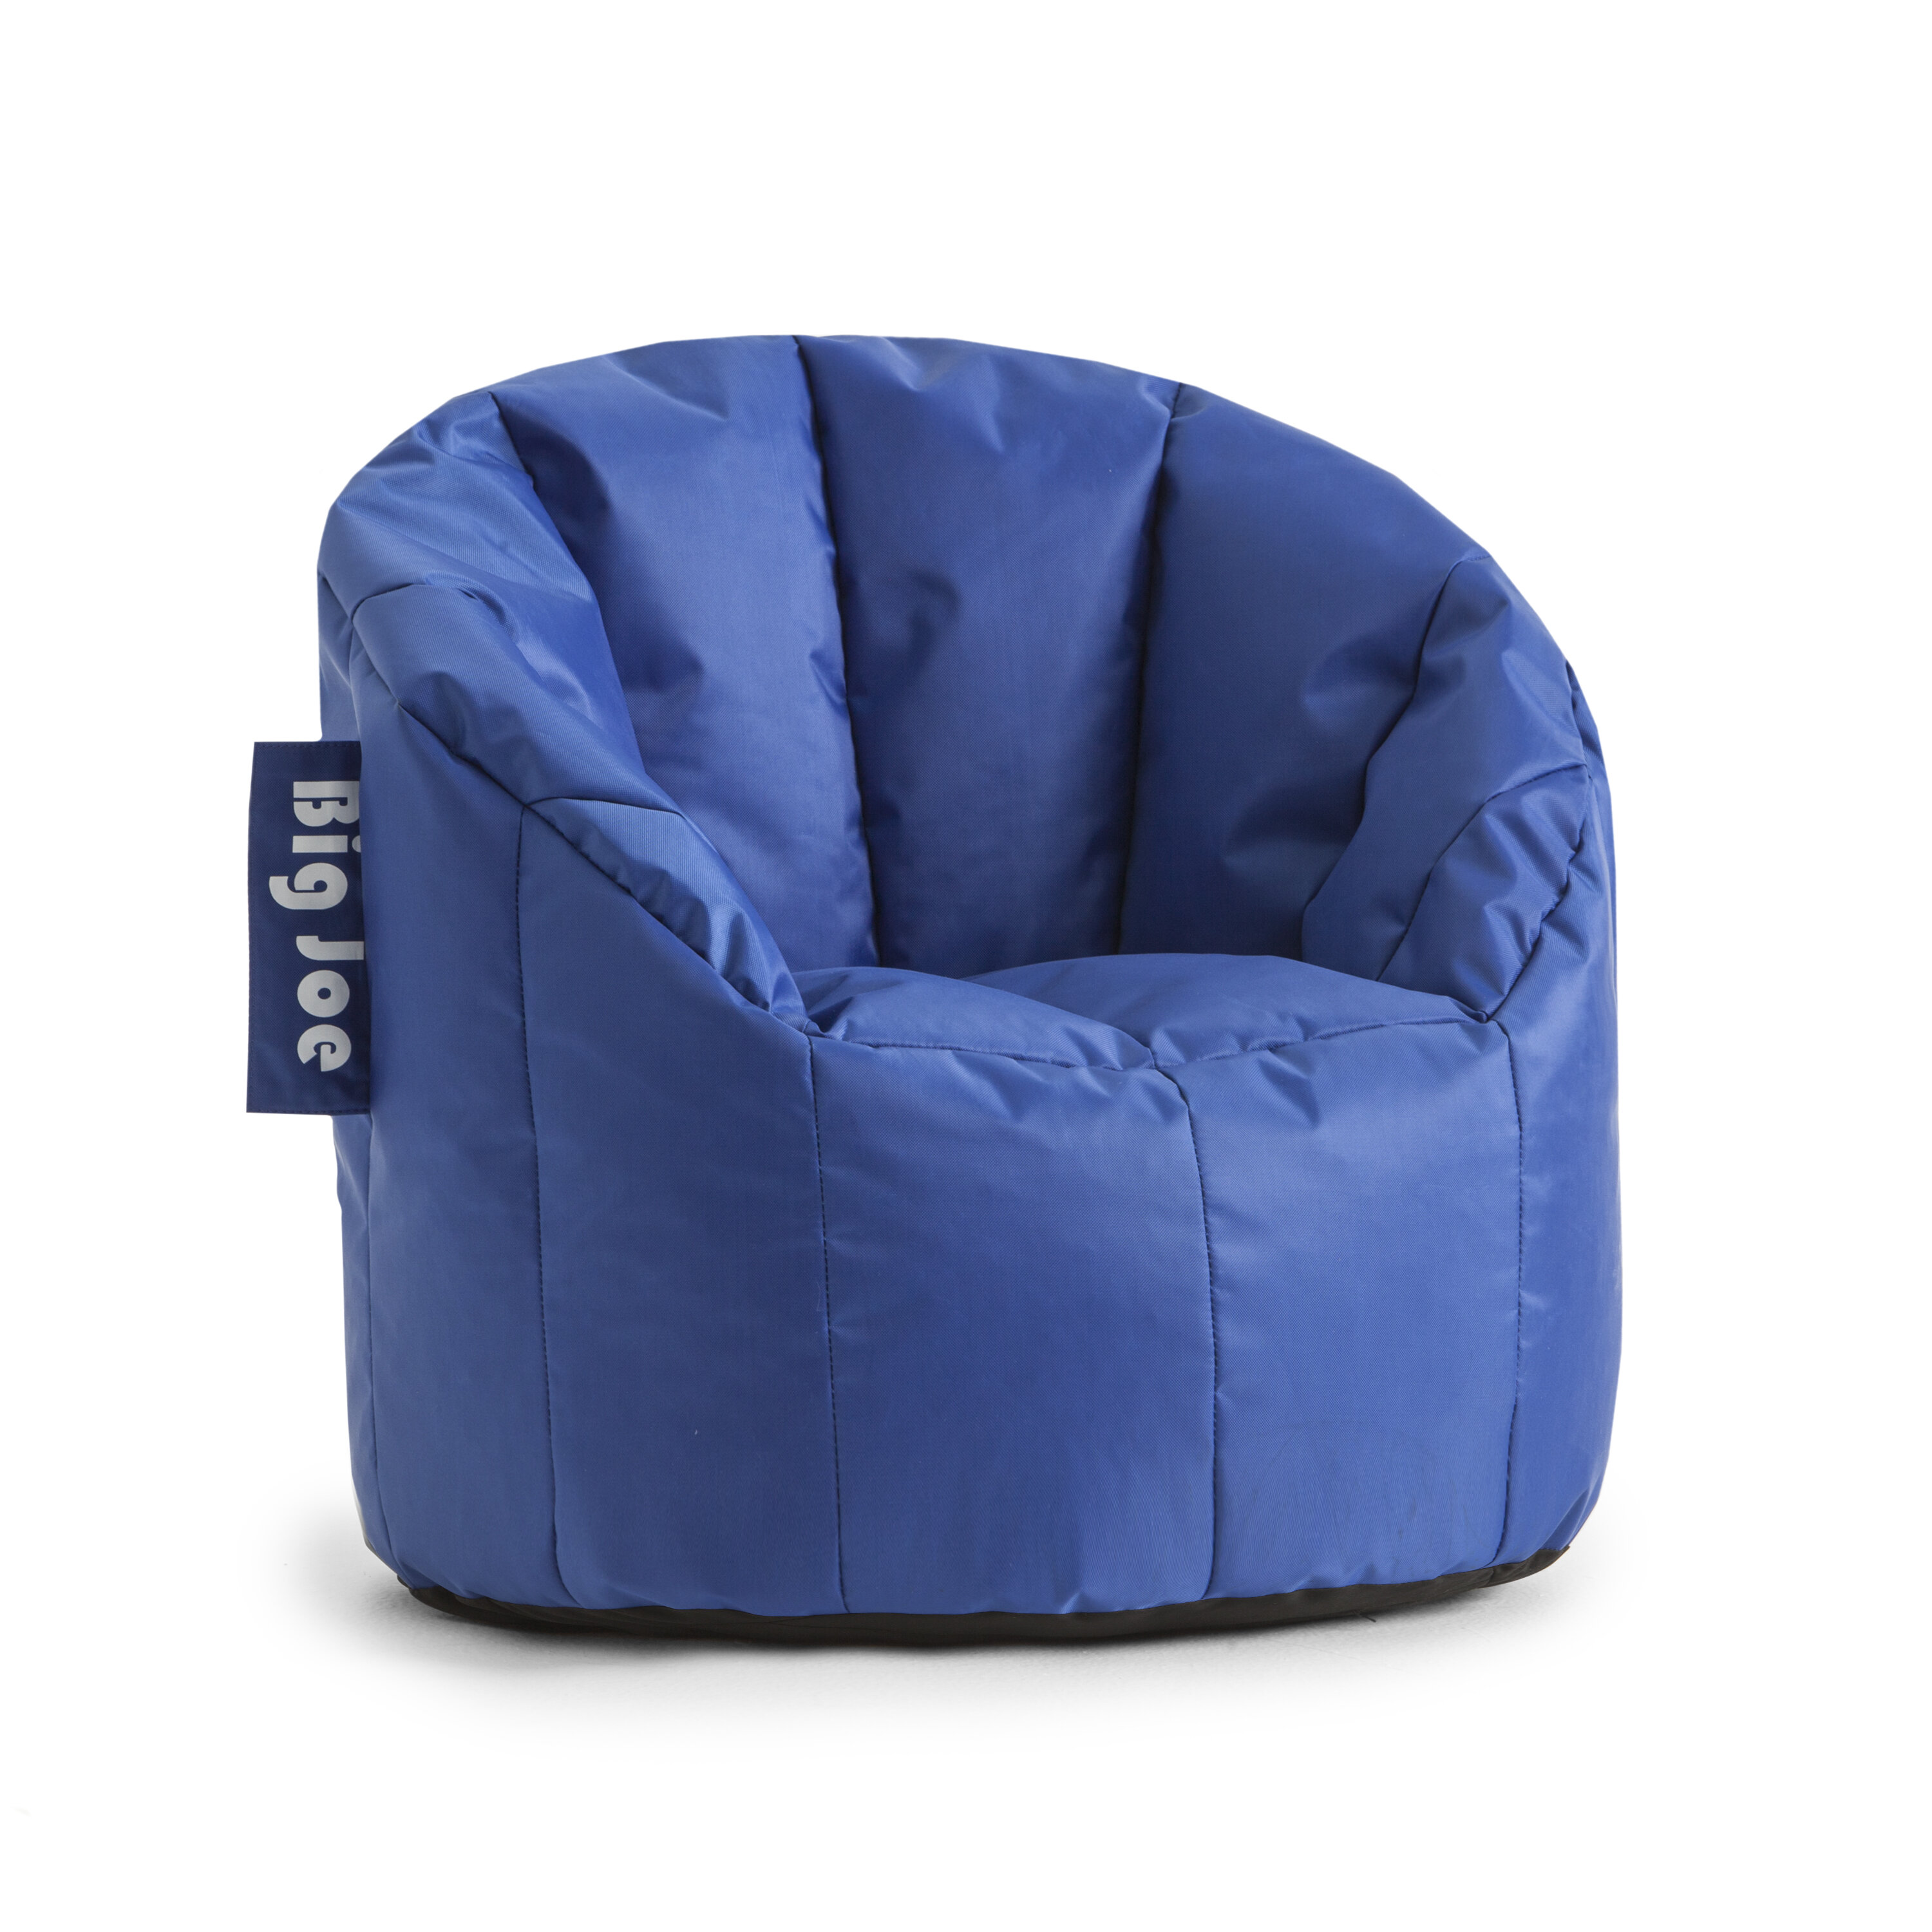 Comfort Research Big Joe Kids Small Bean Bag Chair Lounger